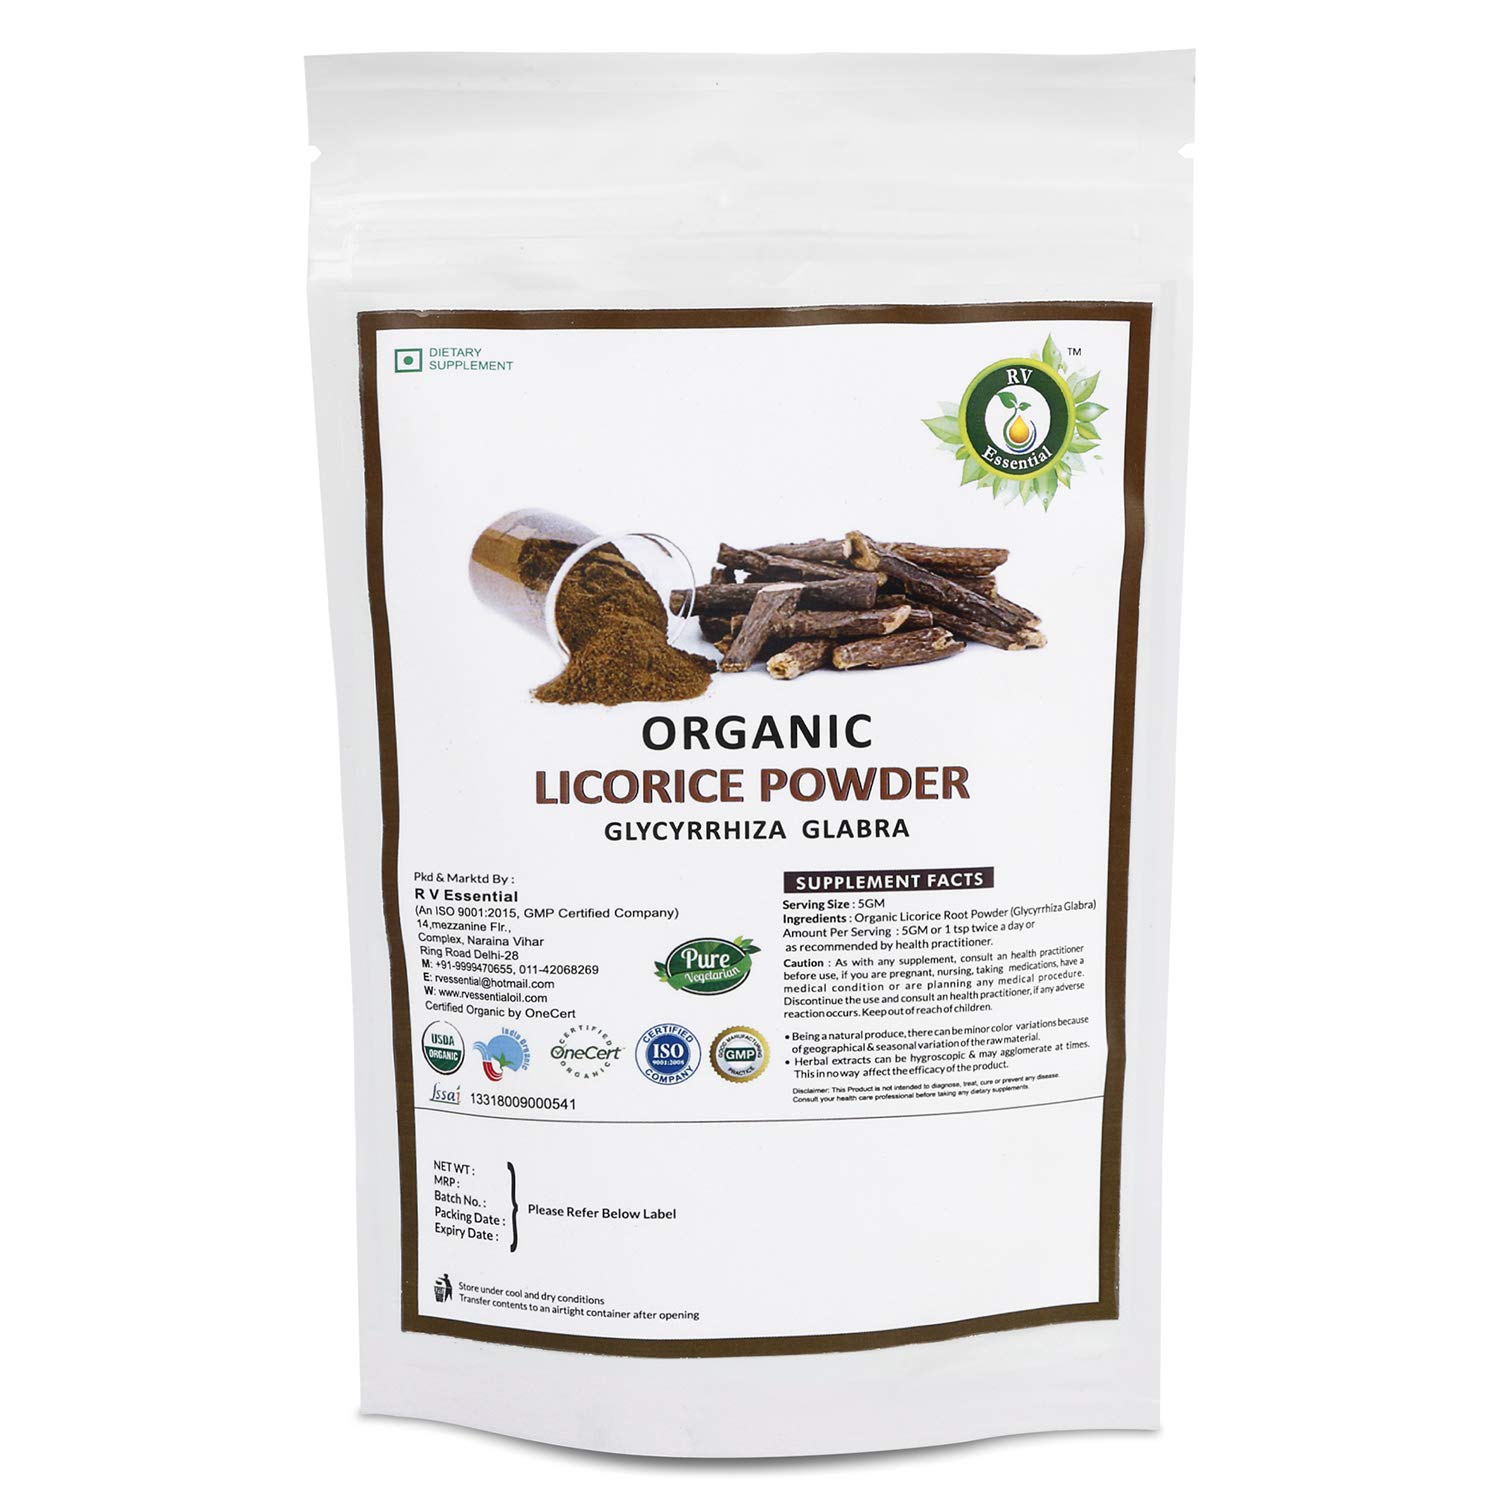 R V Essential Organic Licorice Powder 200gm/ 7.05oz/ 0.44lb Glycyrrhiza Glabra Licorice Root Powder Mulethi Powder Yastimadu Powder Liquorice Powder USDA Organic Certified Supplement in Zip Lock Pouch